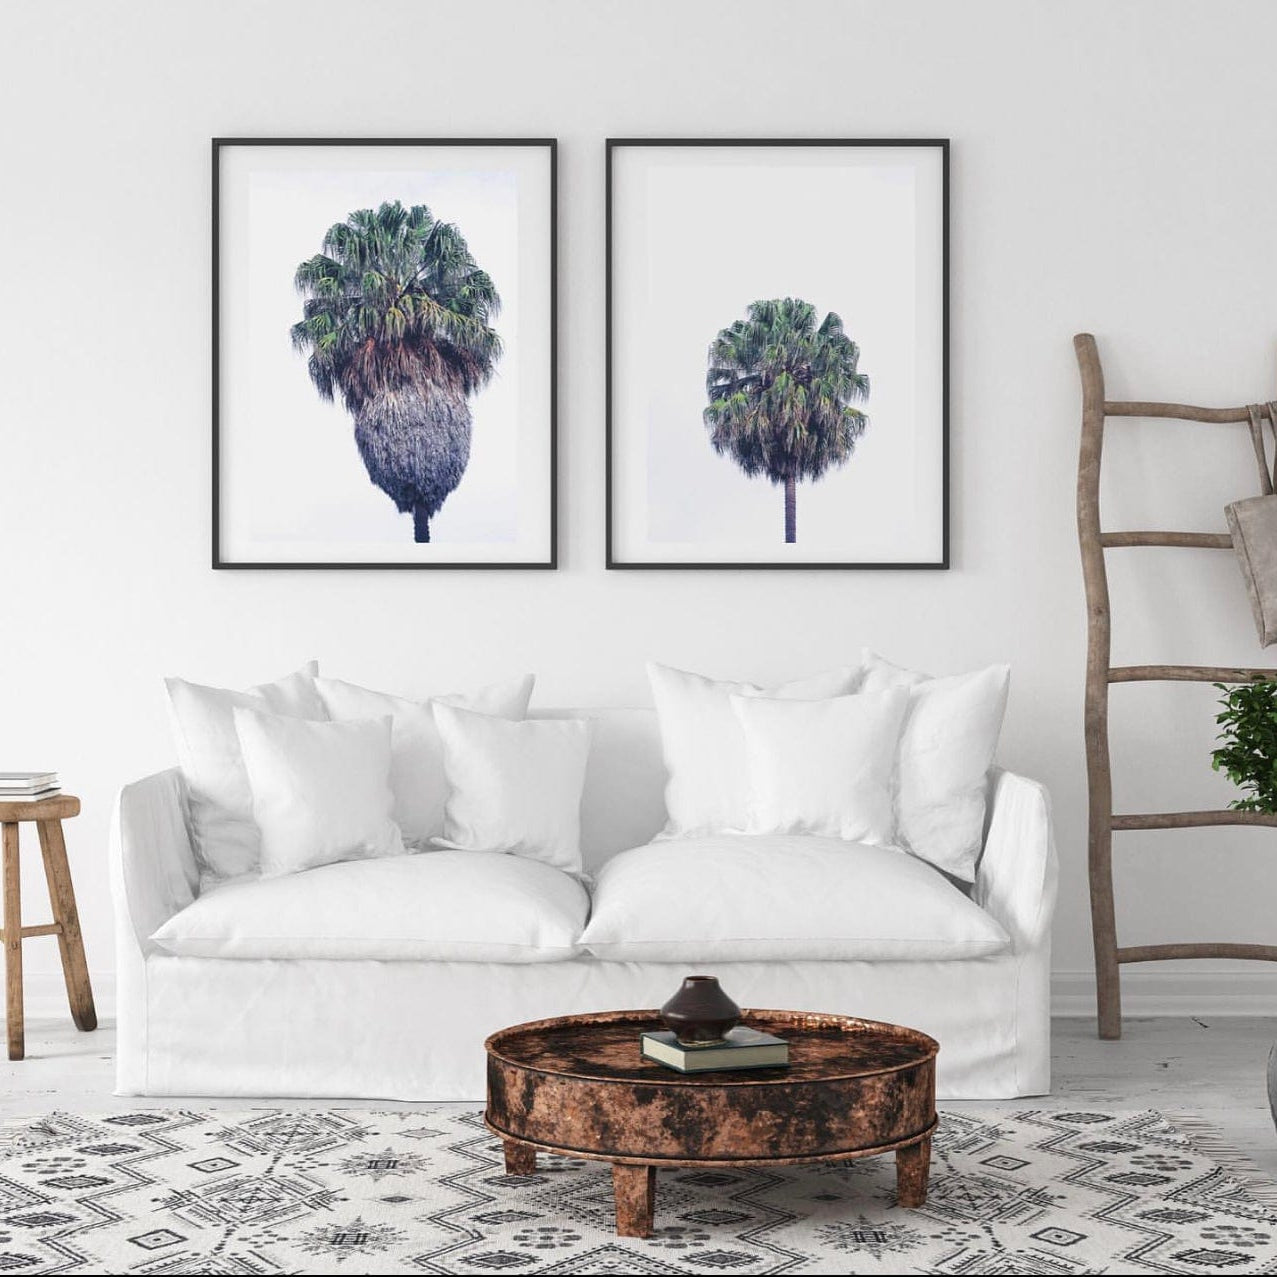 Adam Davies Framed Vaucluse Palm Tree Framed & Mounted Print